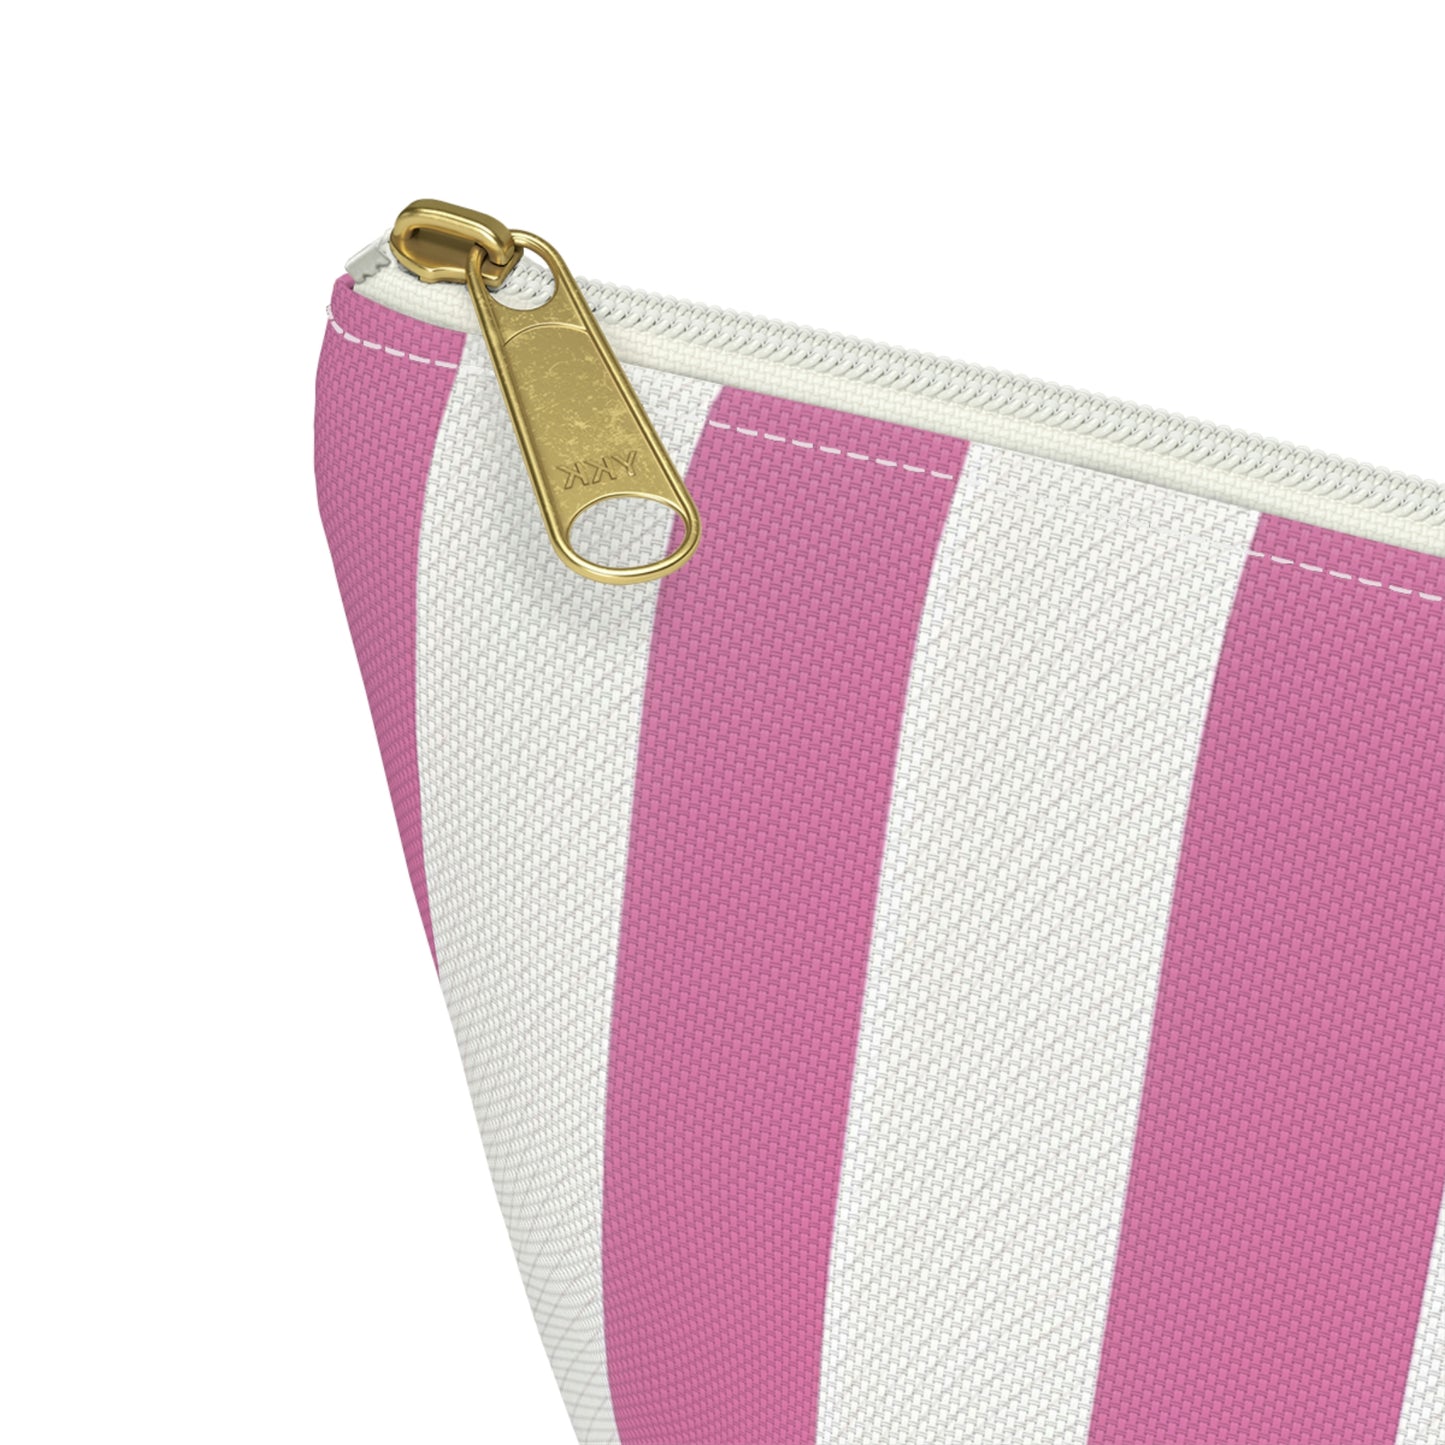 Pink Linear Luxe Small or Large Purse / All Over Print • Mila Beachwear - California - Mila Beachwear